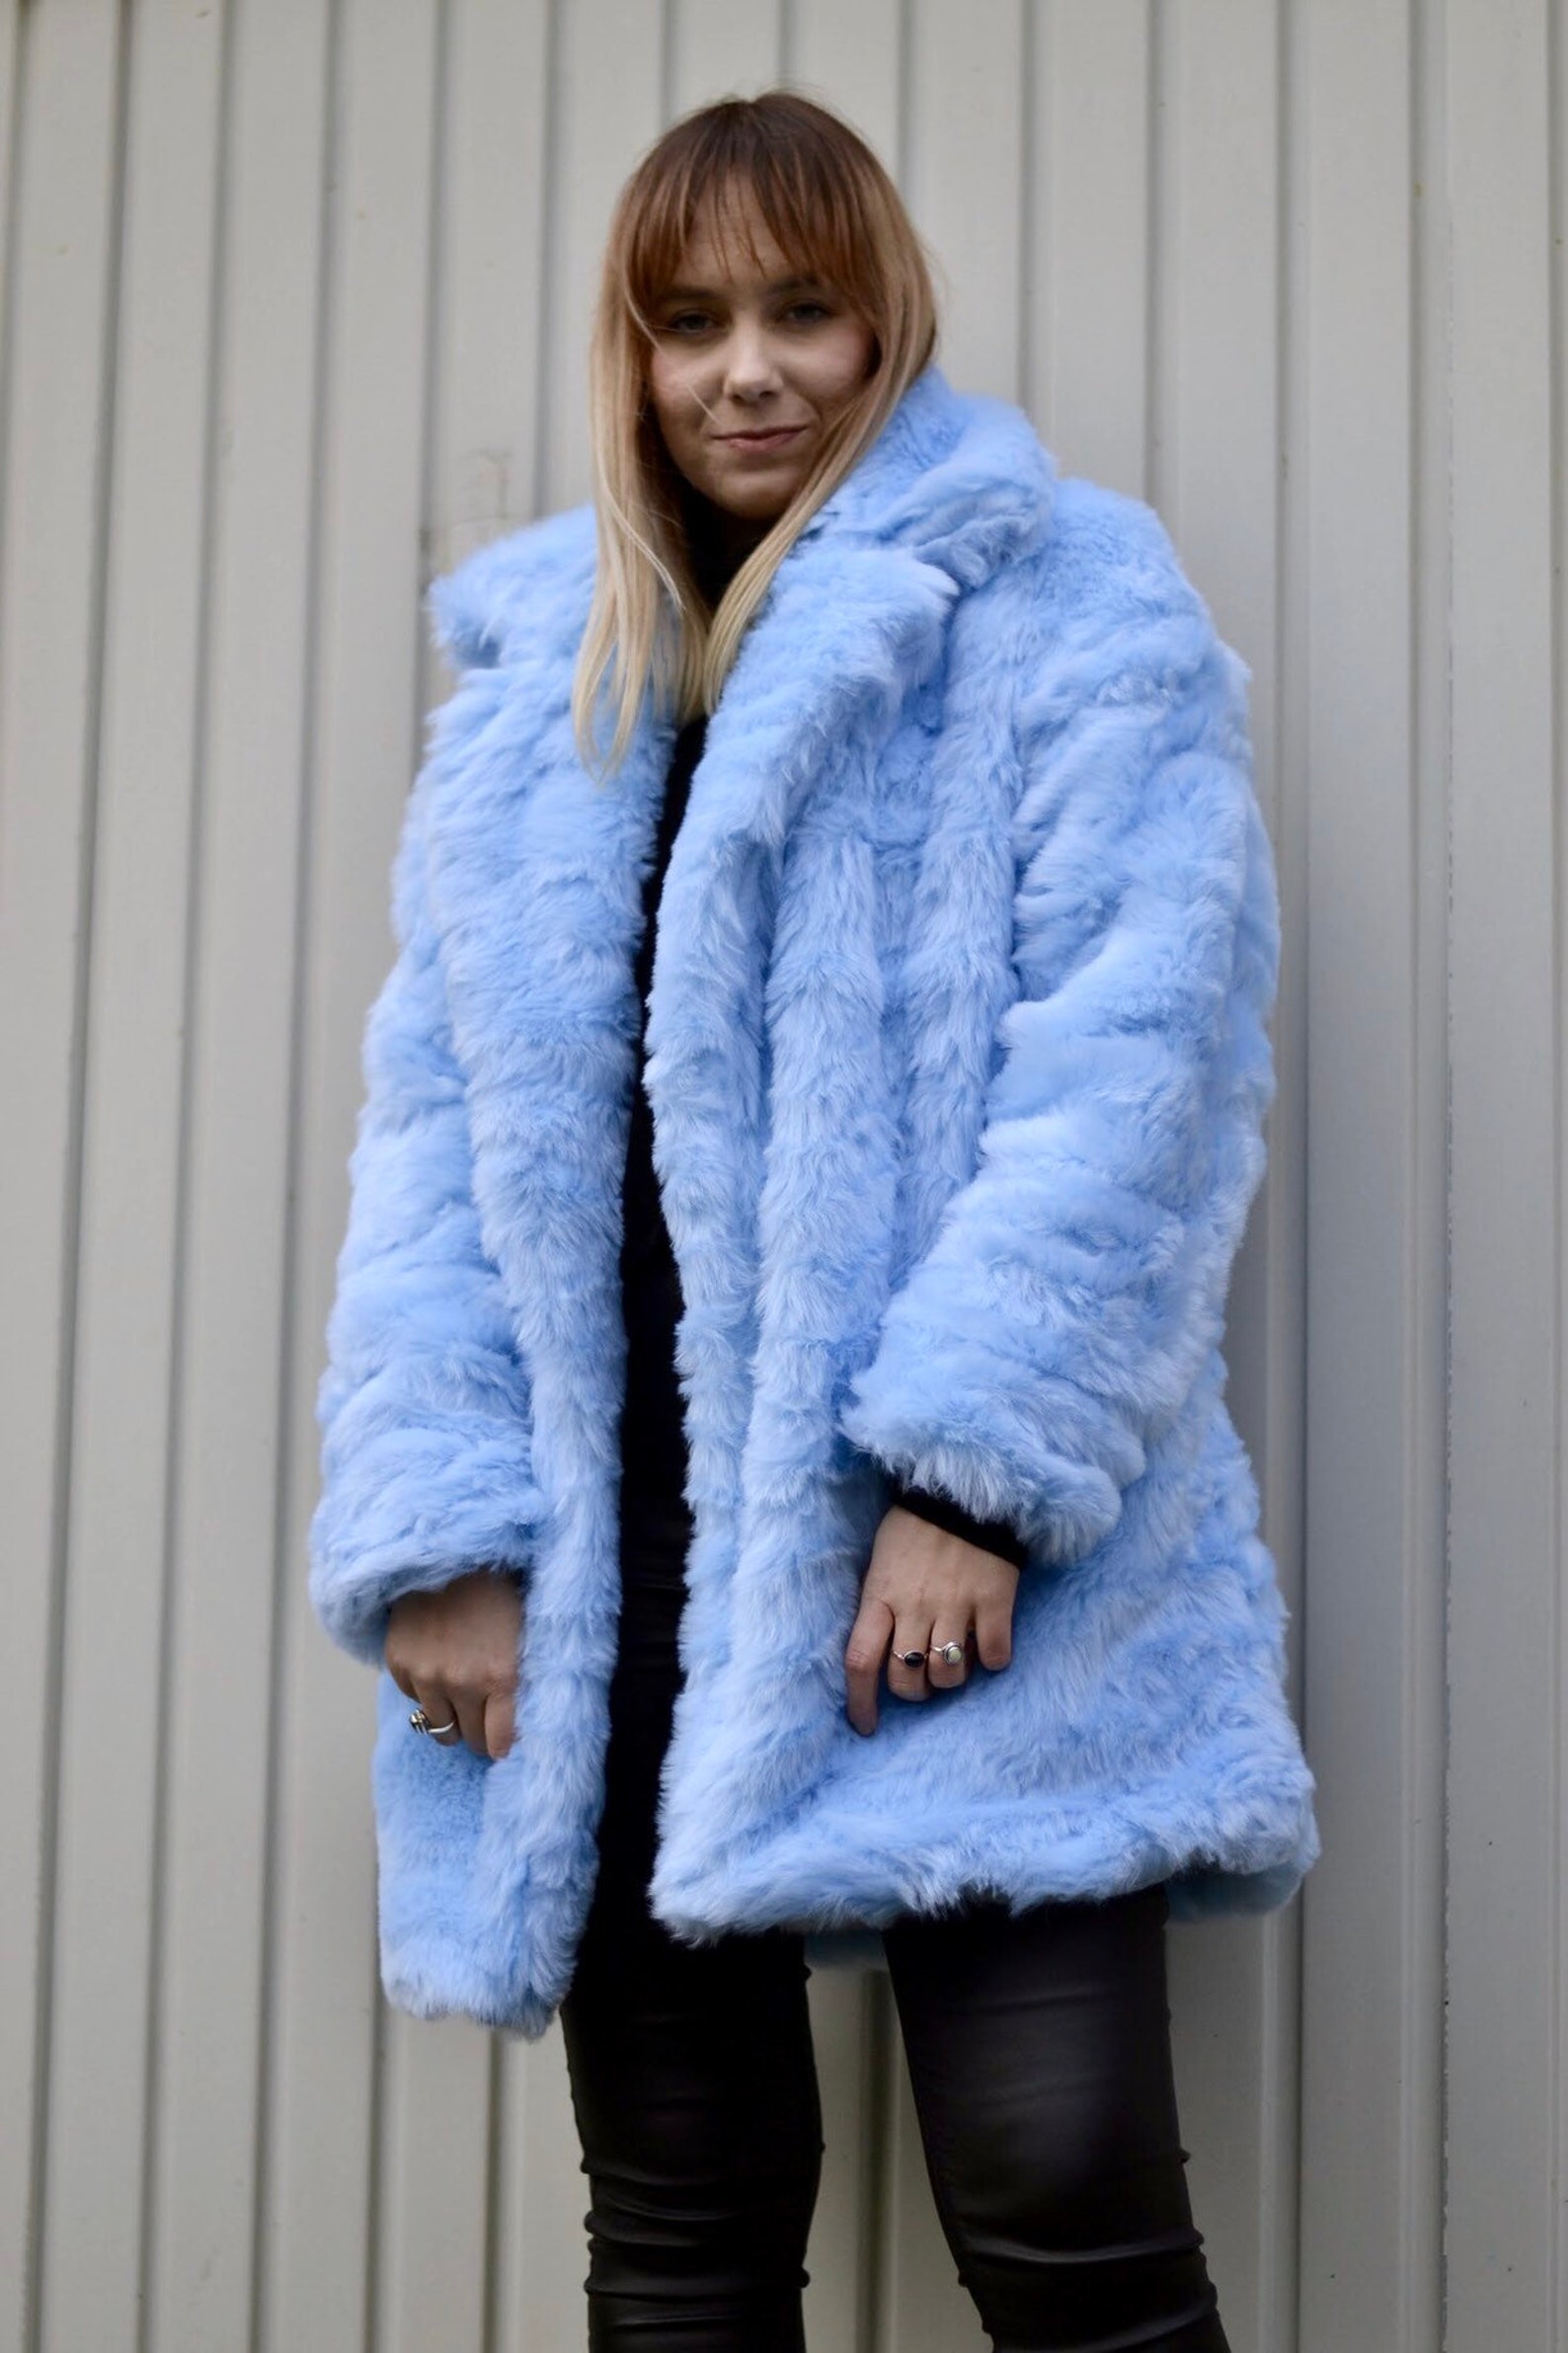 Baby Blue fur coat fluffy jacket furry 100% polyester | Etsy